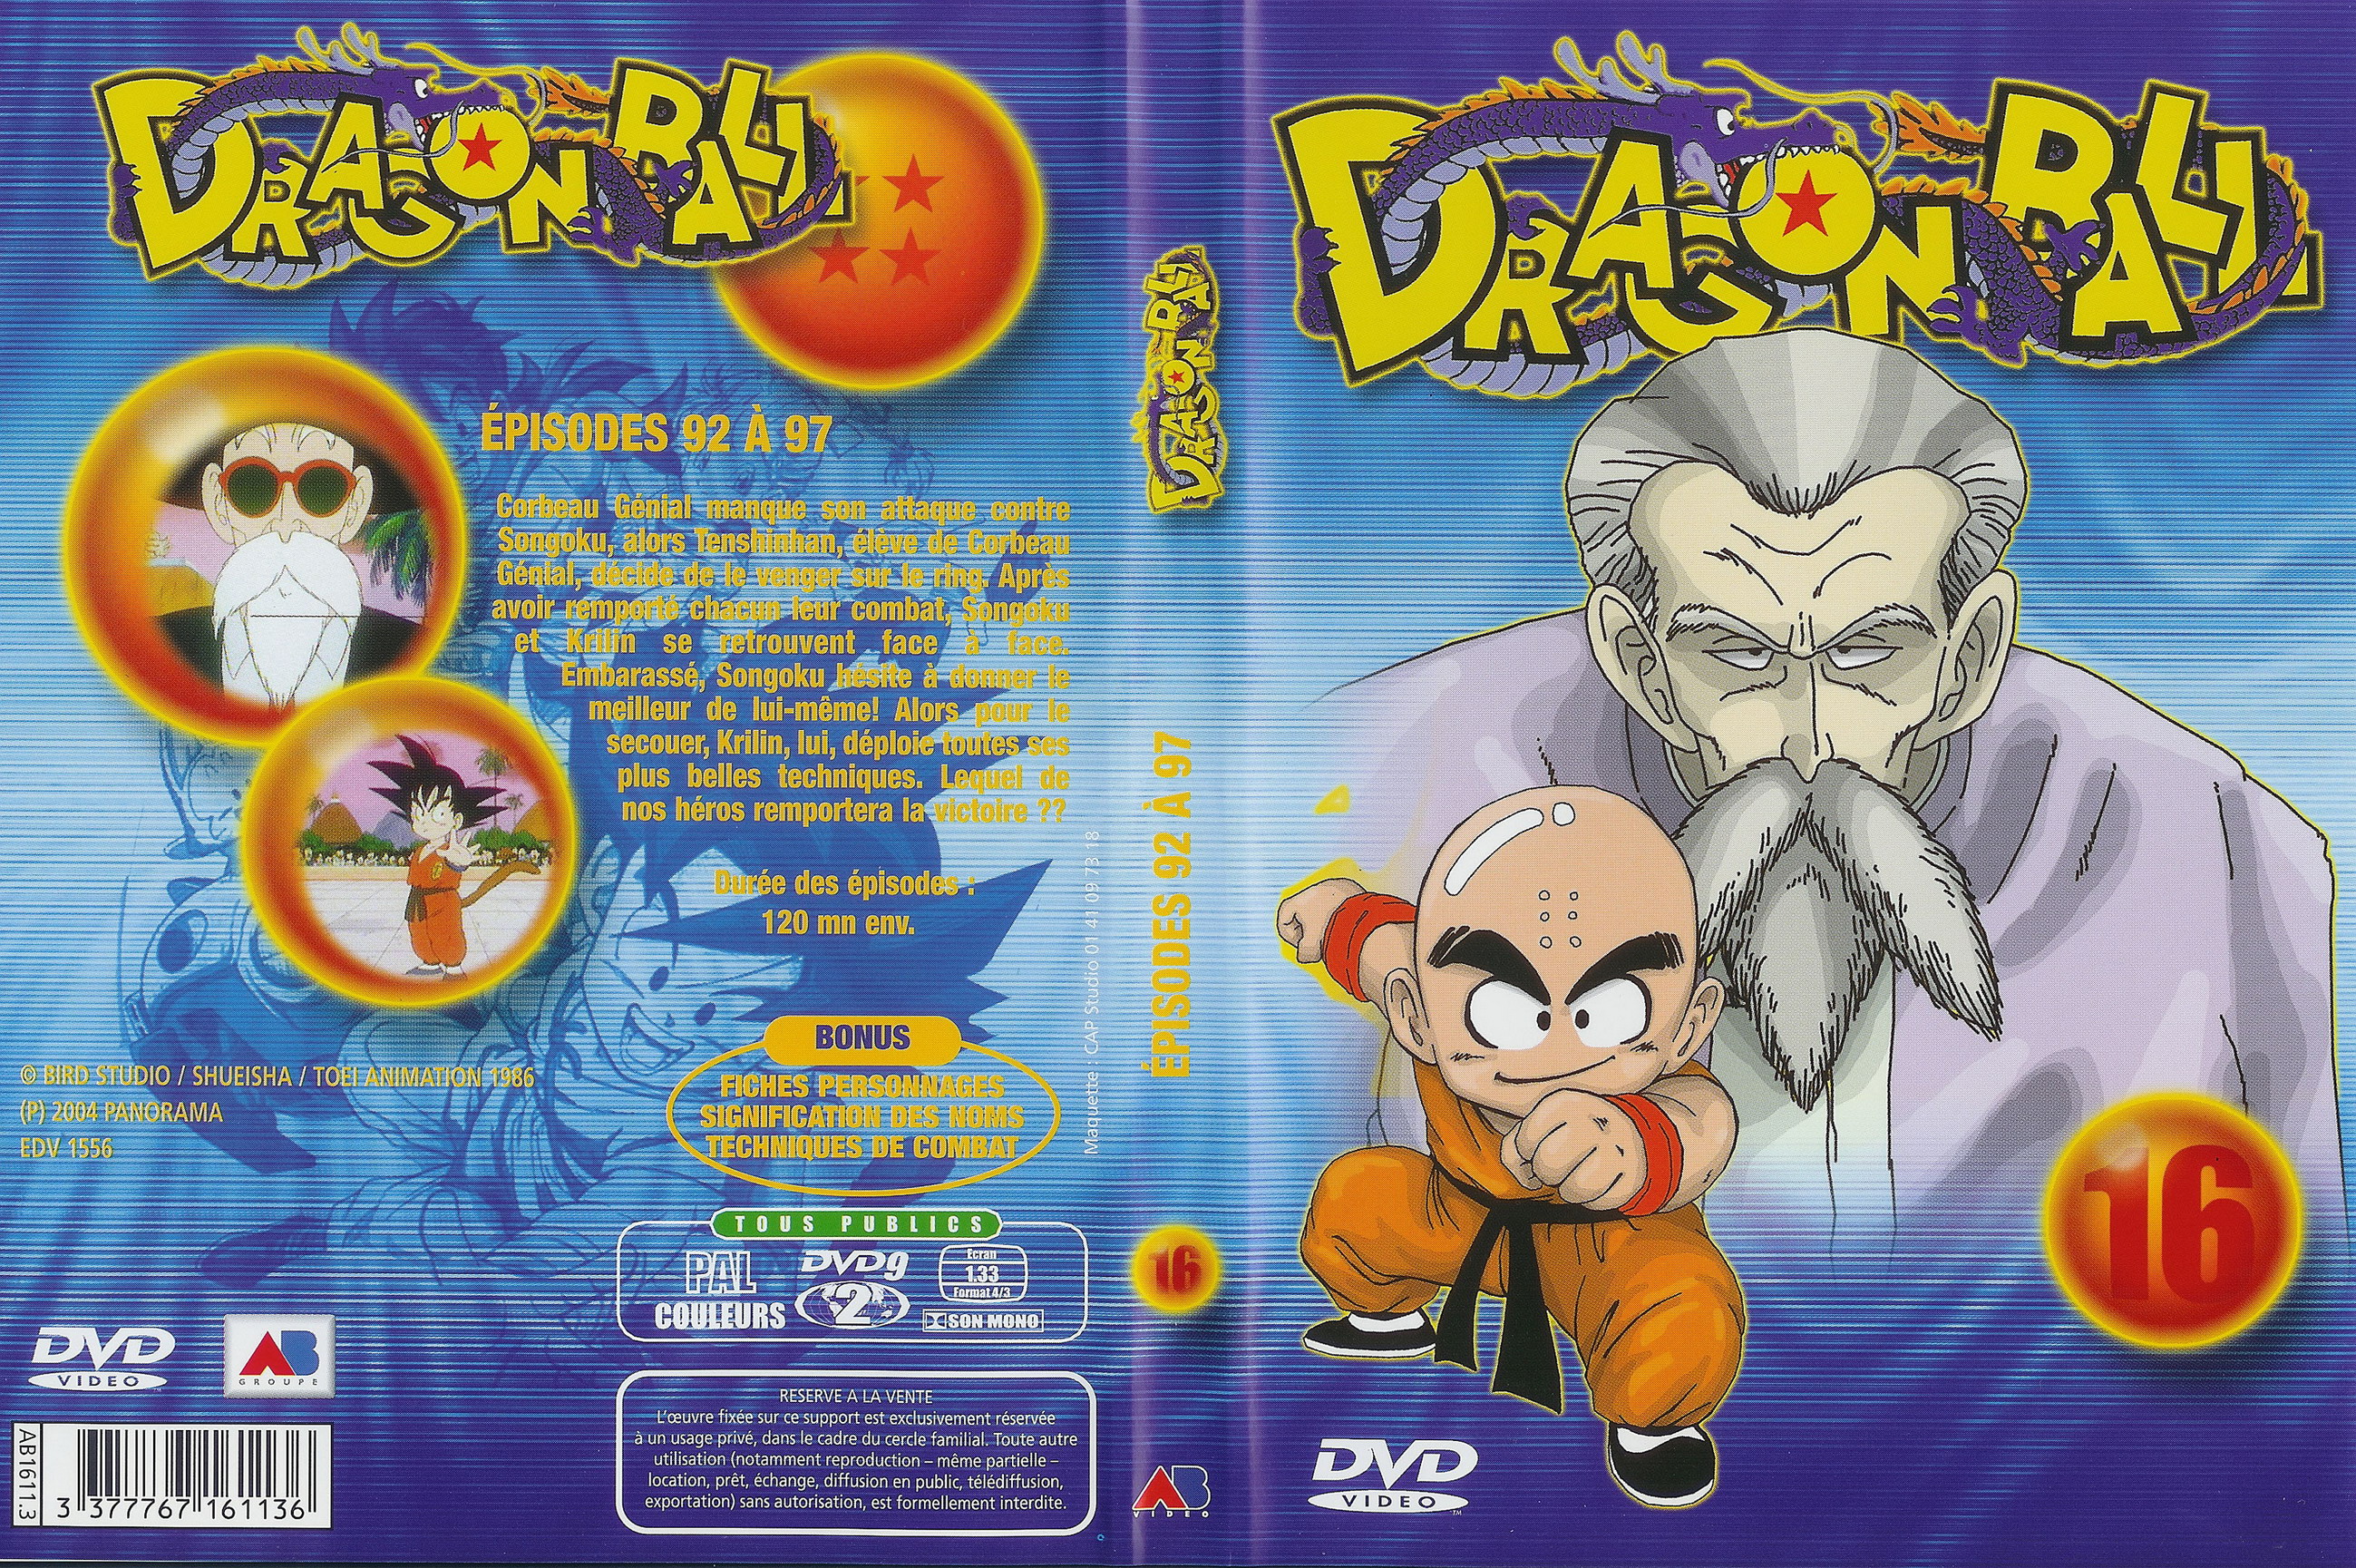 Jaquette DVD Dragon ball vol 16 v2